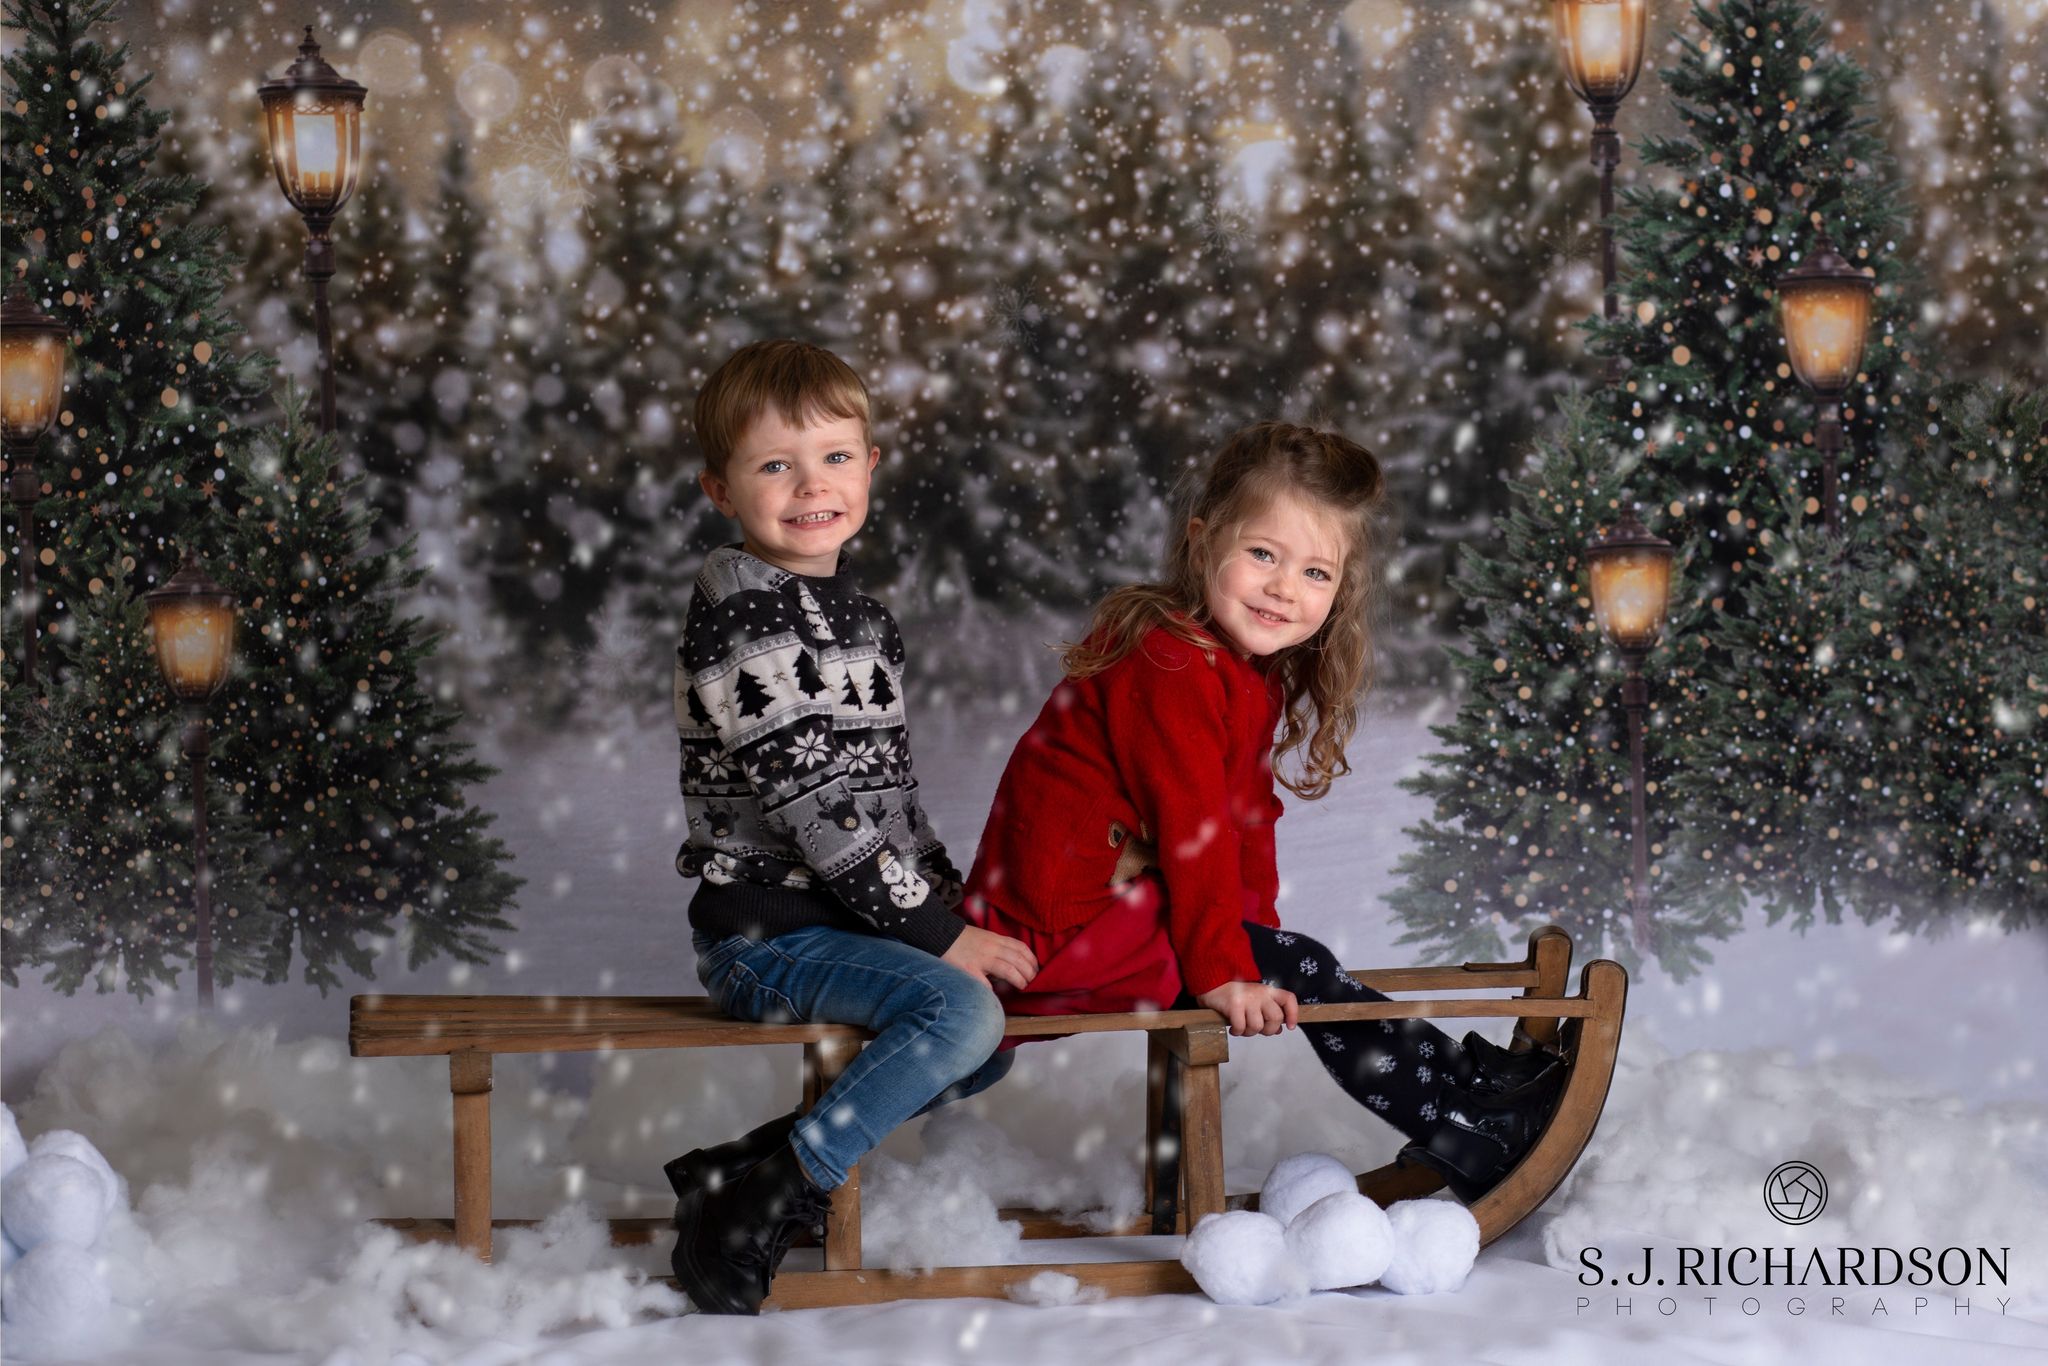 Kate Christmas Snow Forest Lights Fleece Backdrop for Photography -UK